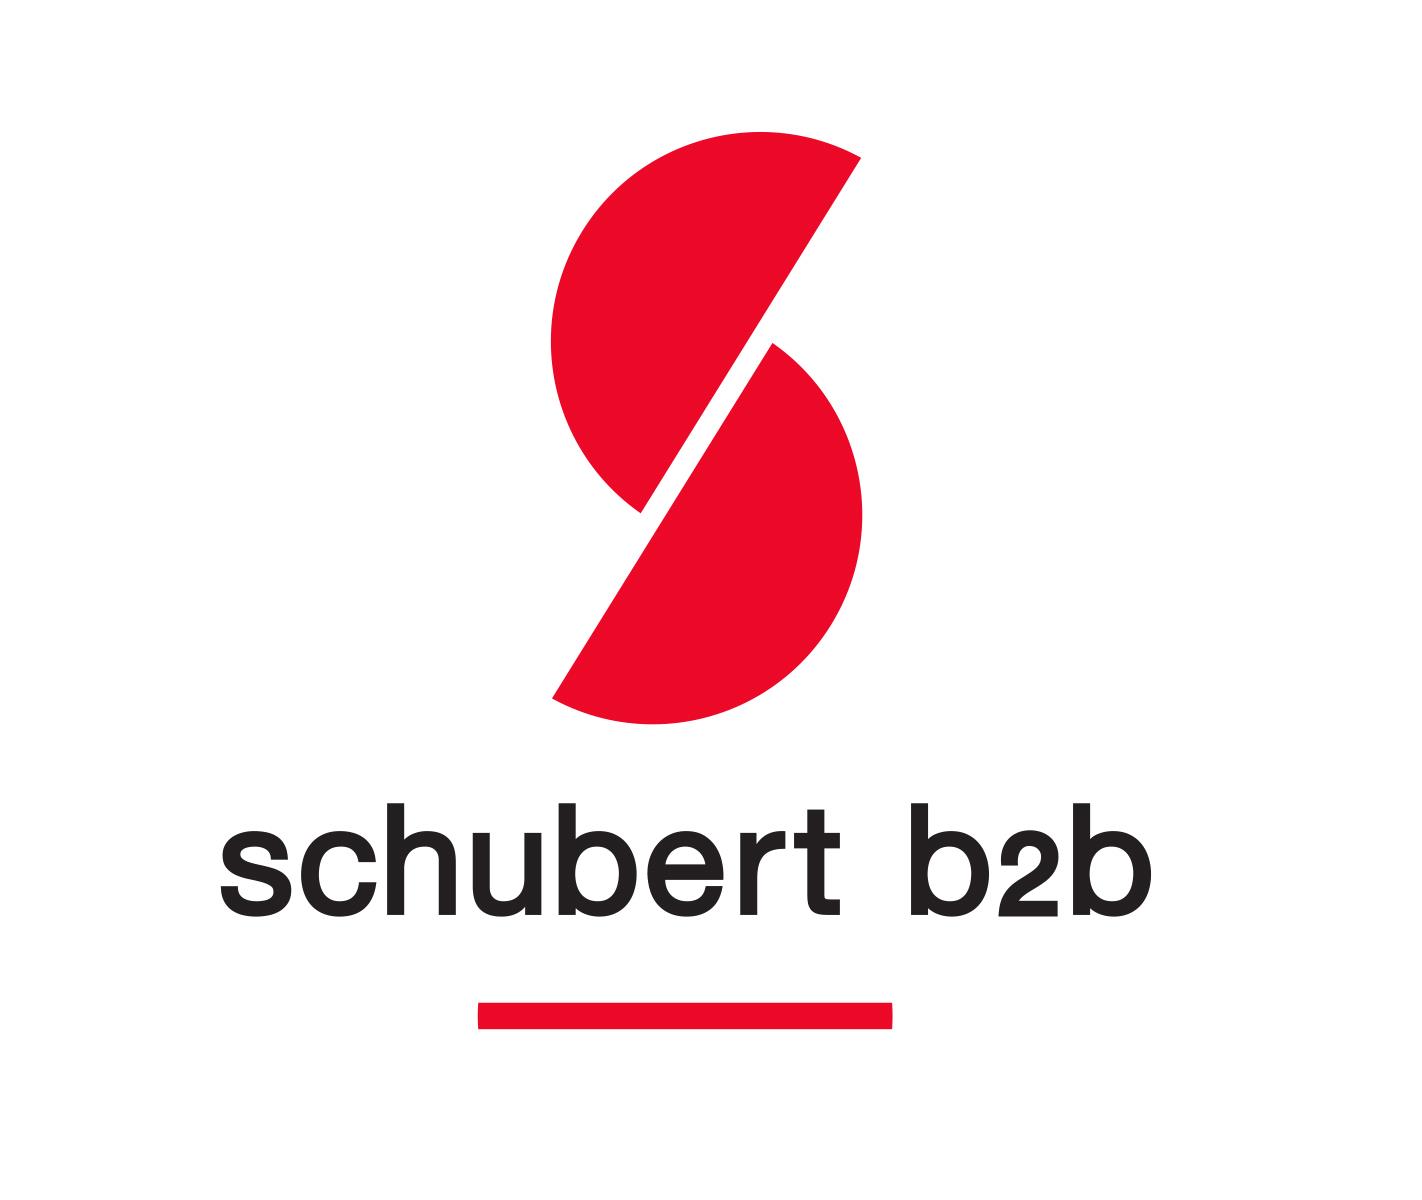 Schubert b2b